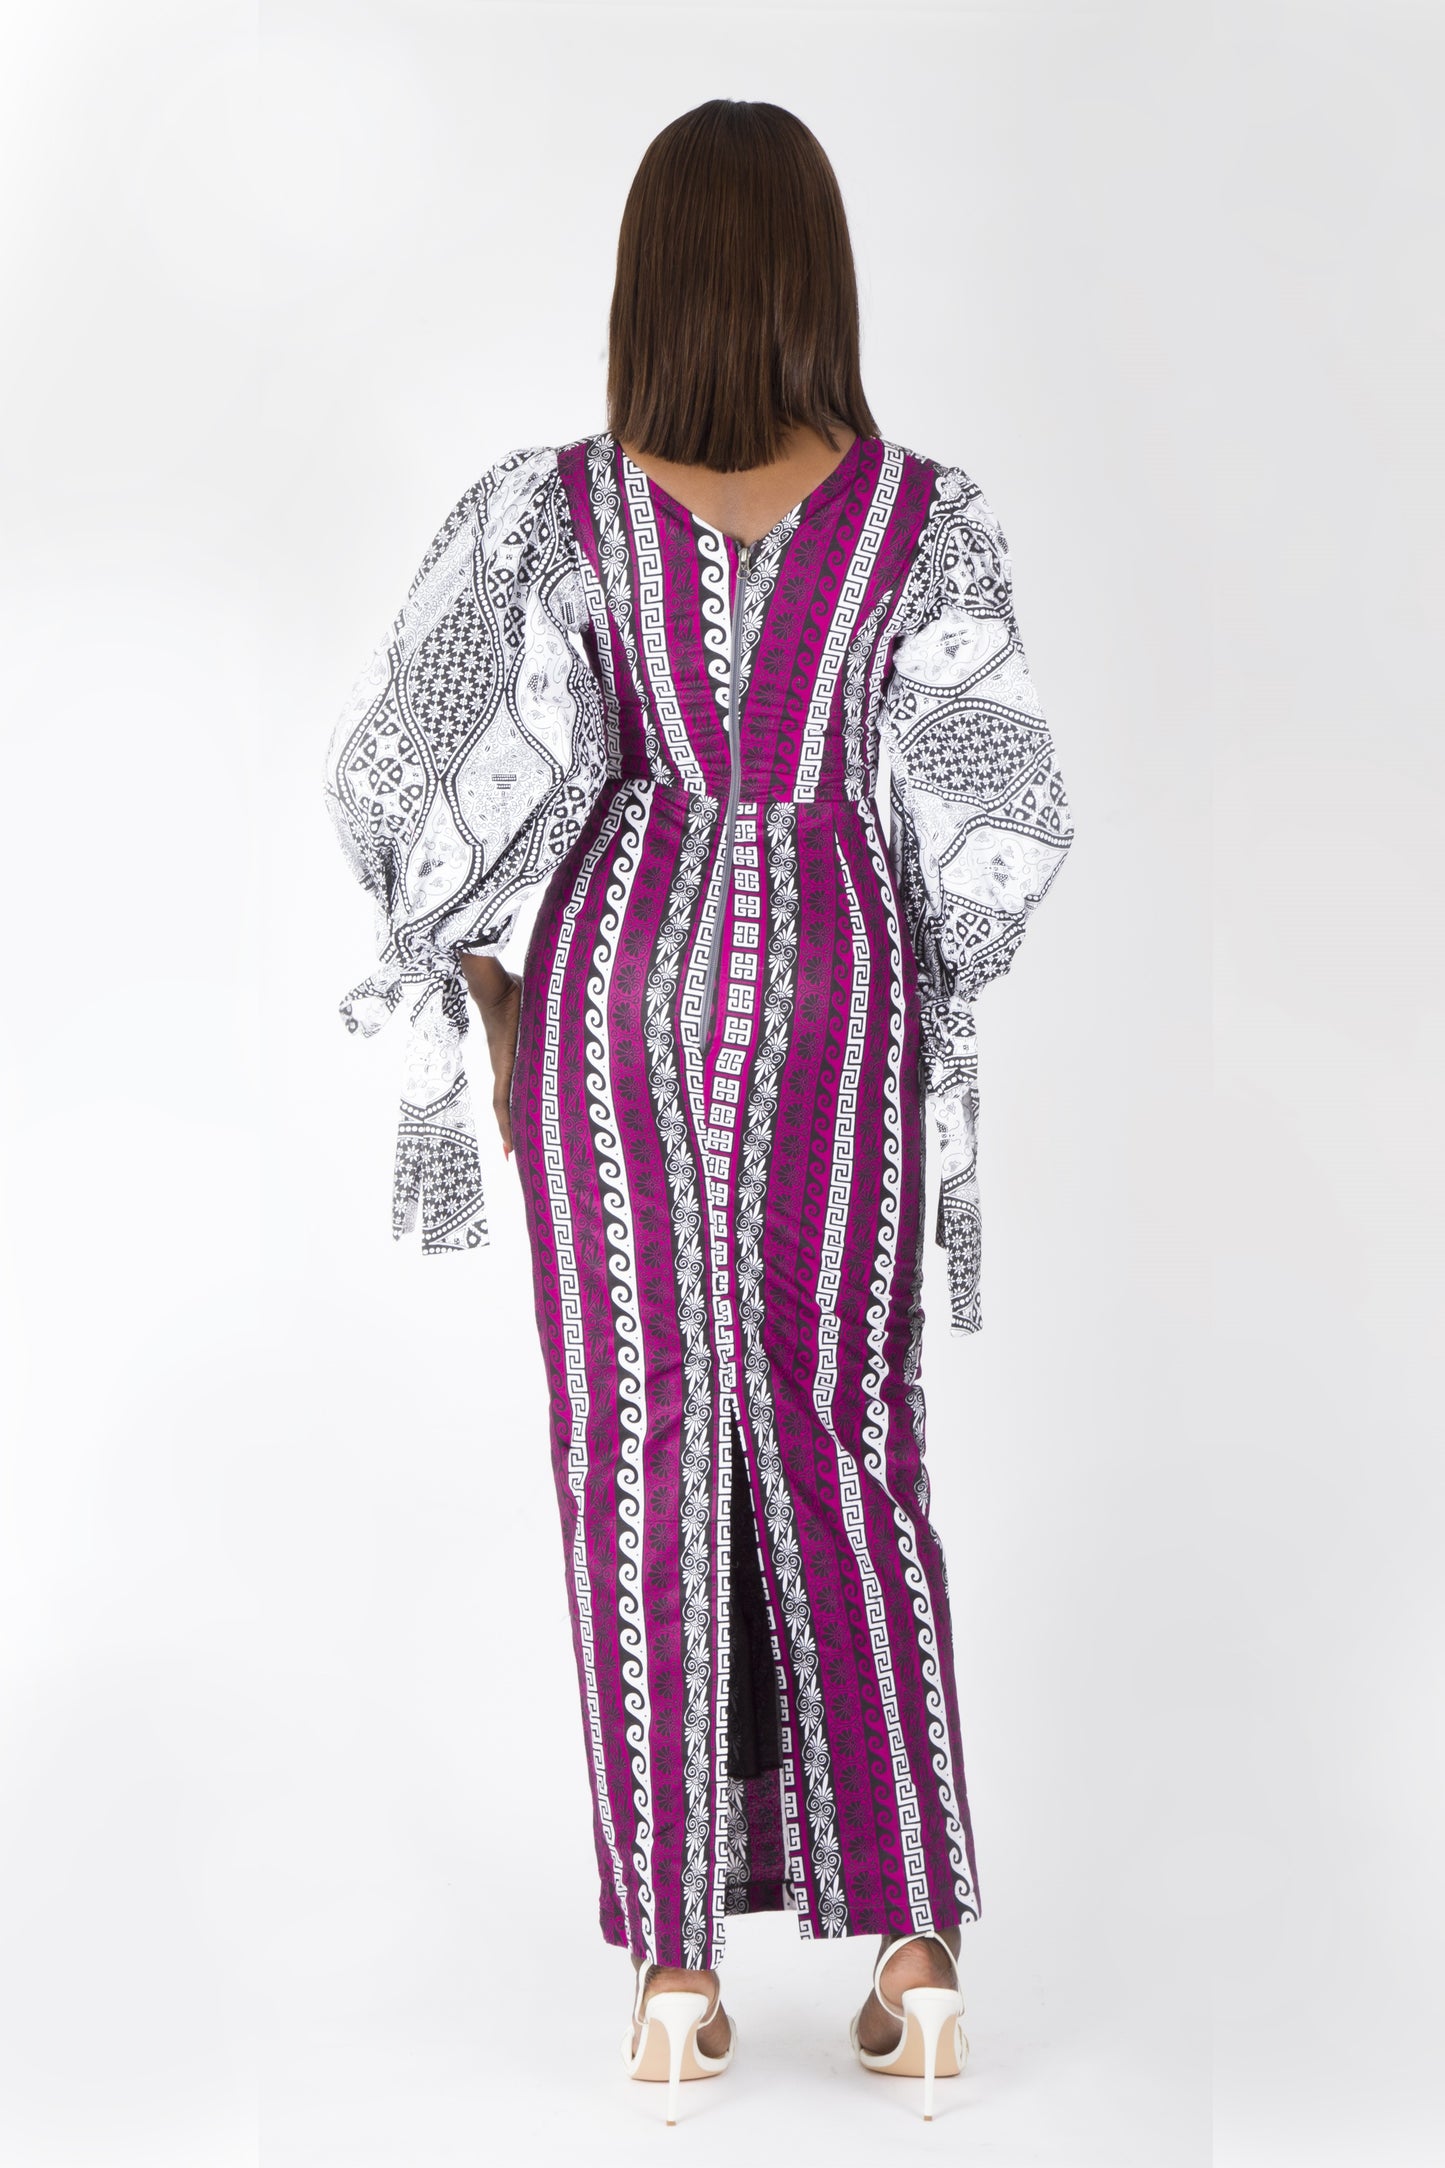 PURPLE BLACK AFRICAN ANKARA PRINT PLUS SIZE CLOTHING PARTY DRESS